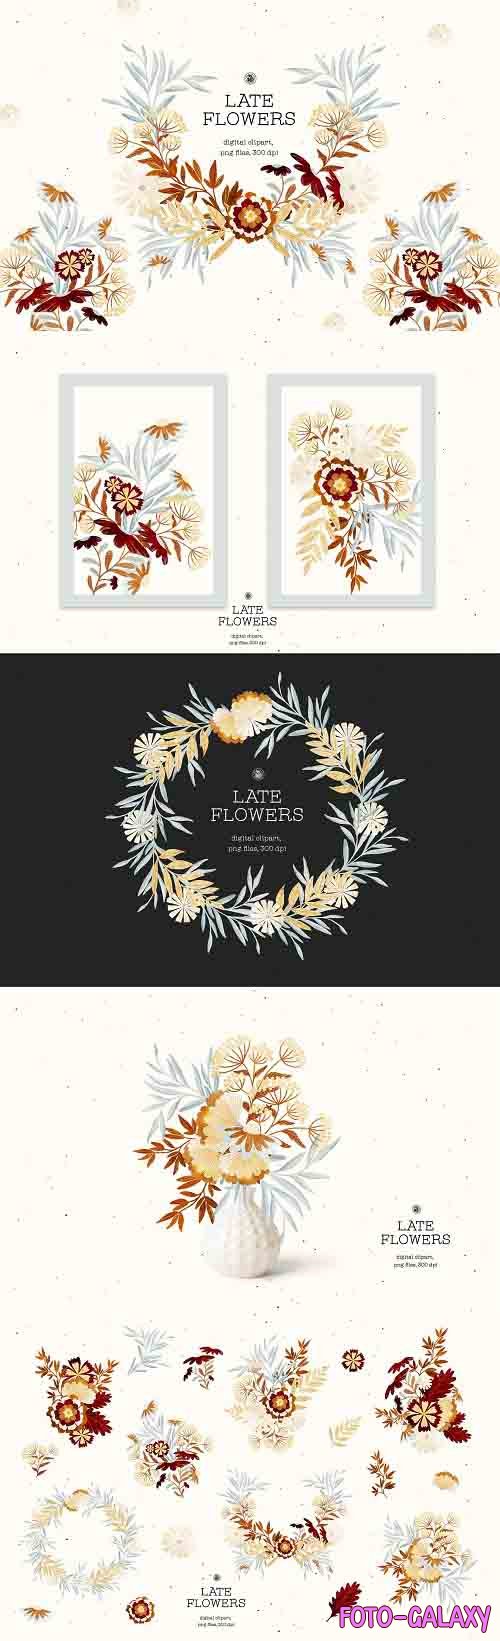 Late Flowers - digital clipart set - 5977962